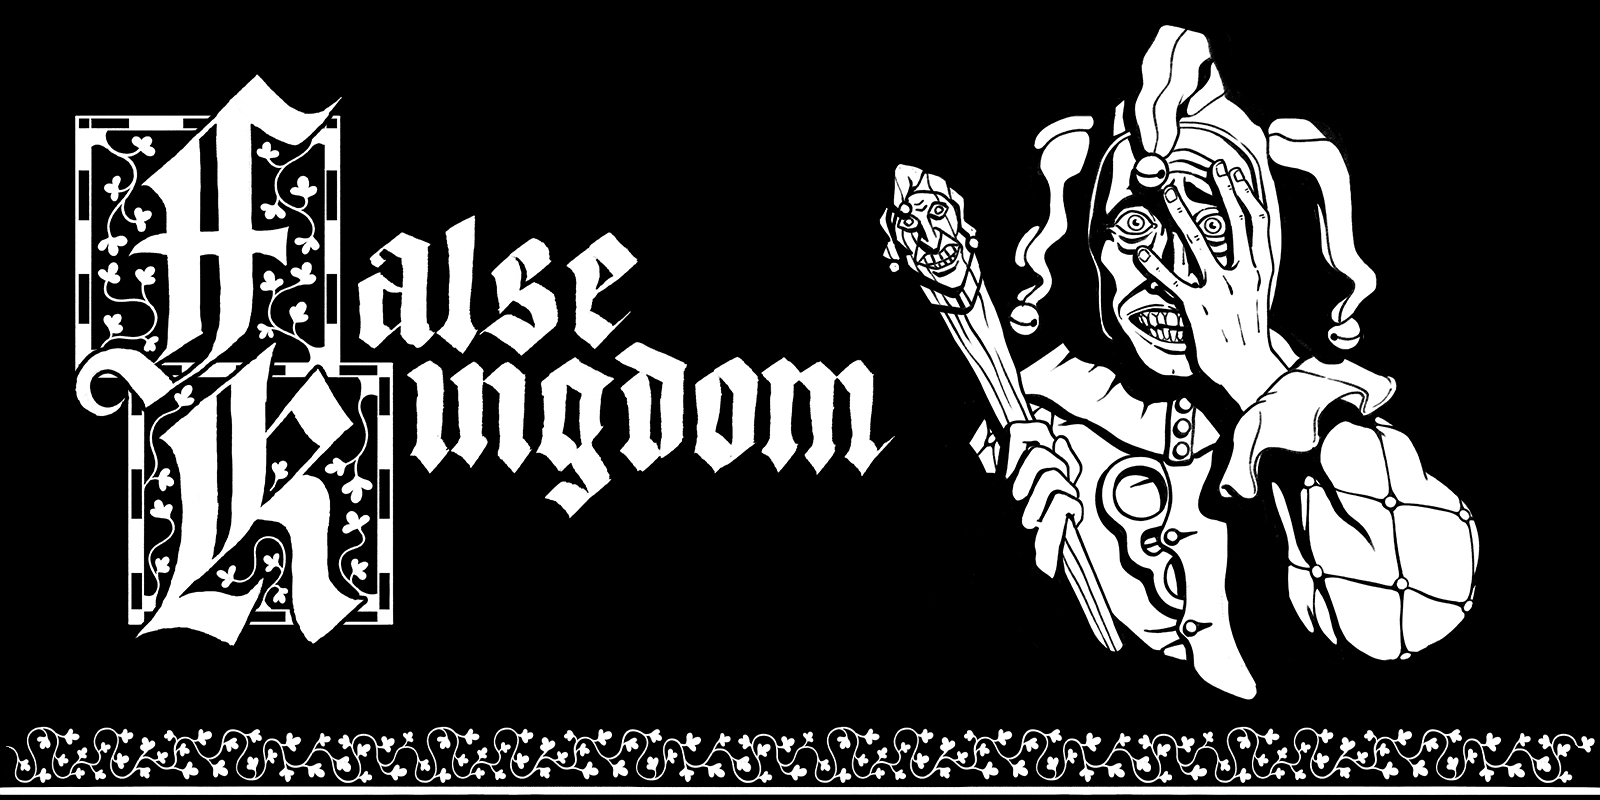 FALSE KINGDOM